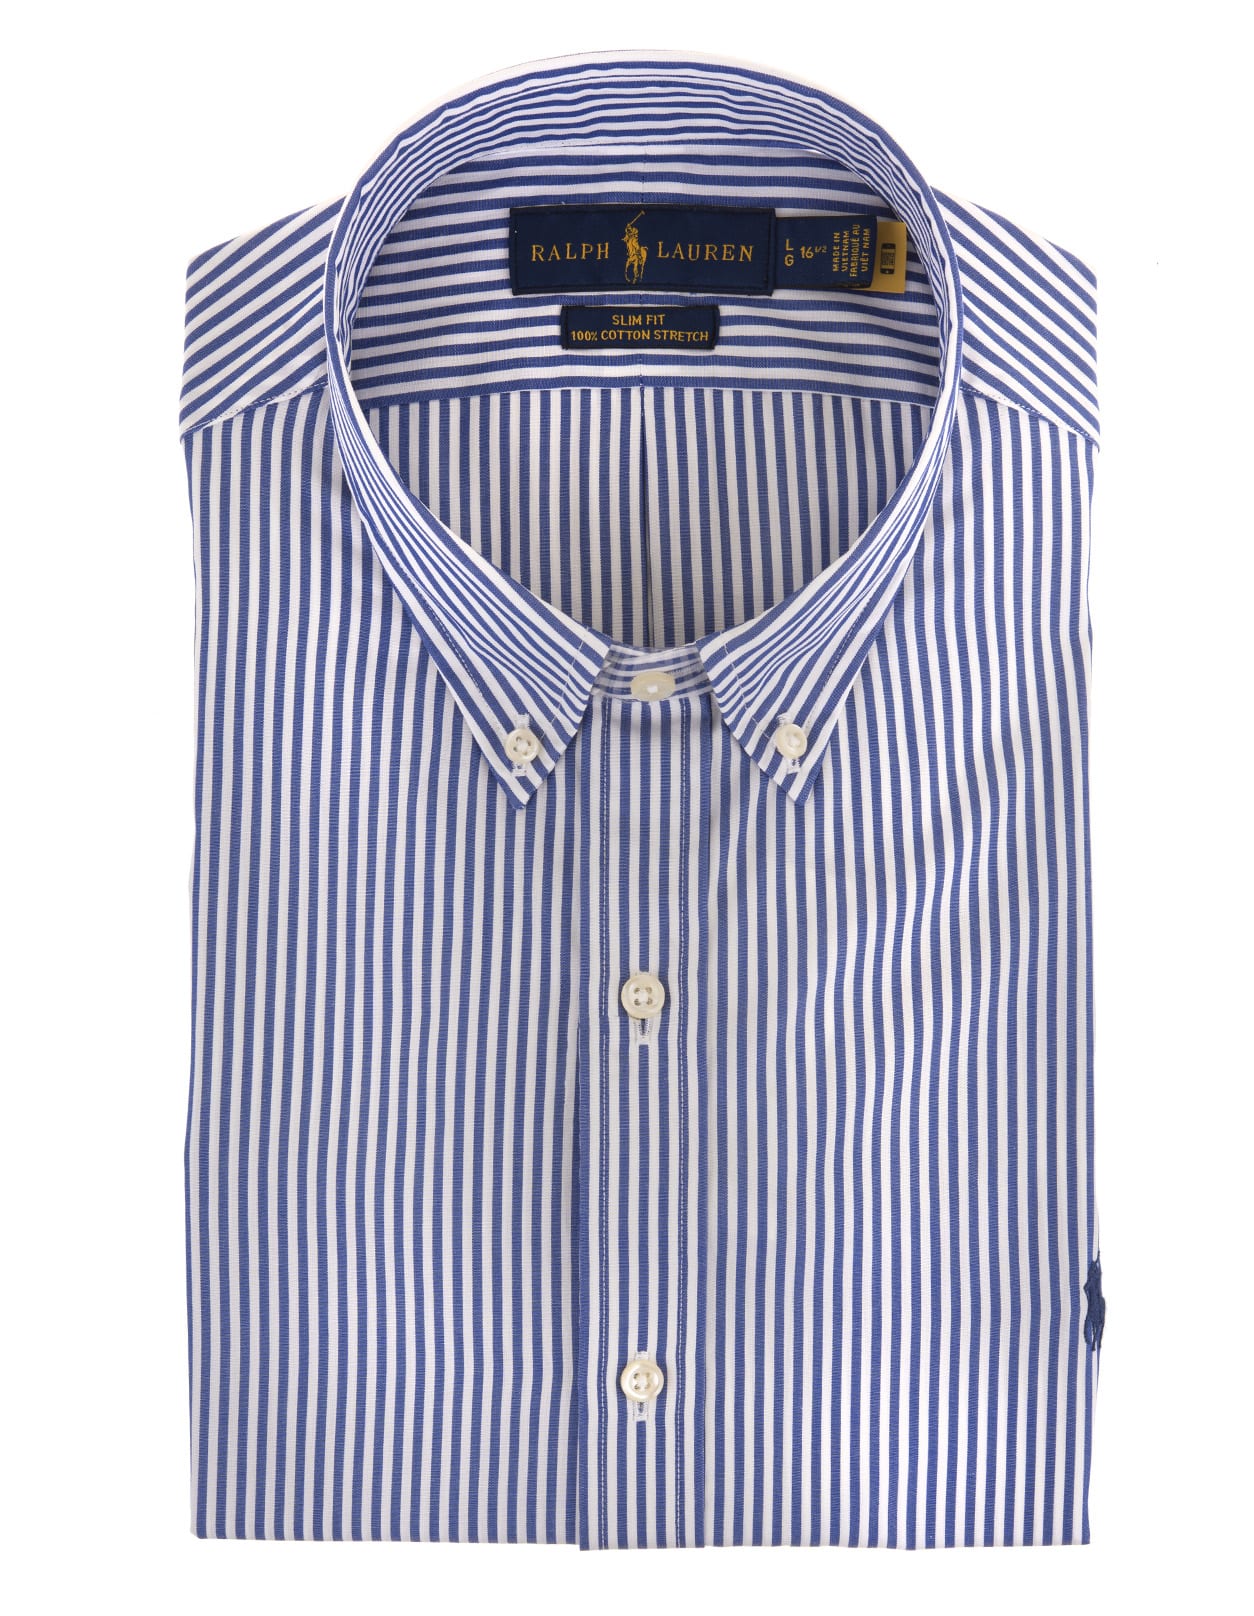 Ralph Lauren Man Slim Fit Shirt In White And Blue Striped Poplin